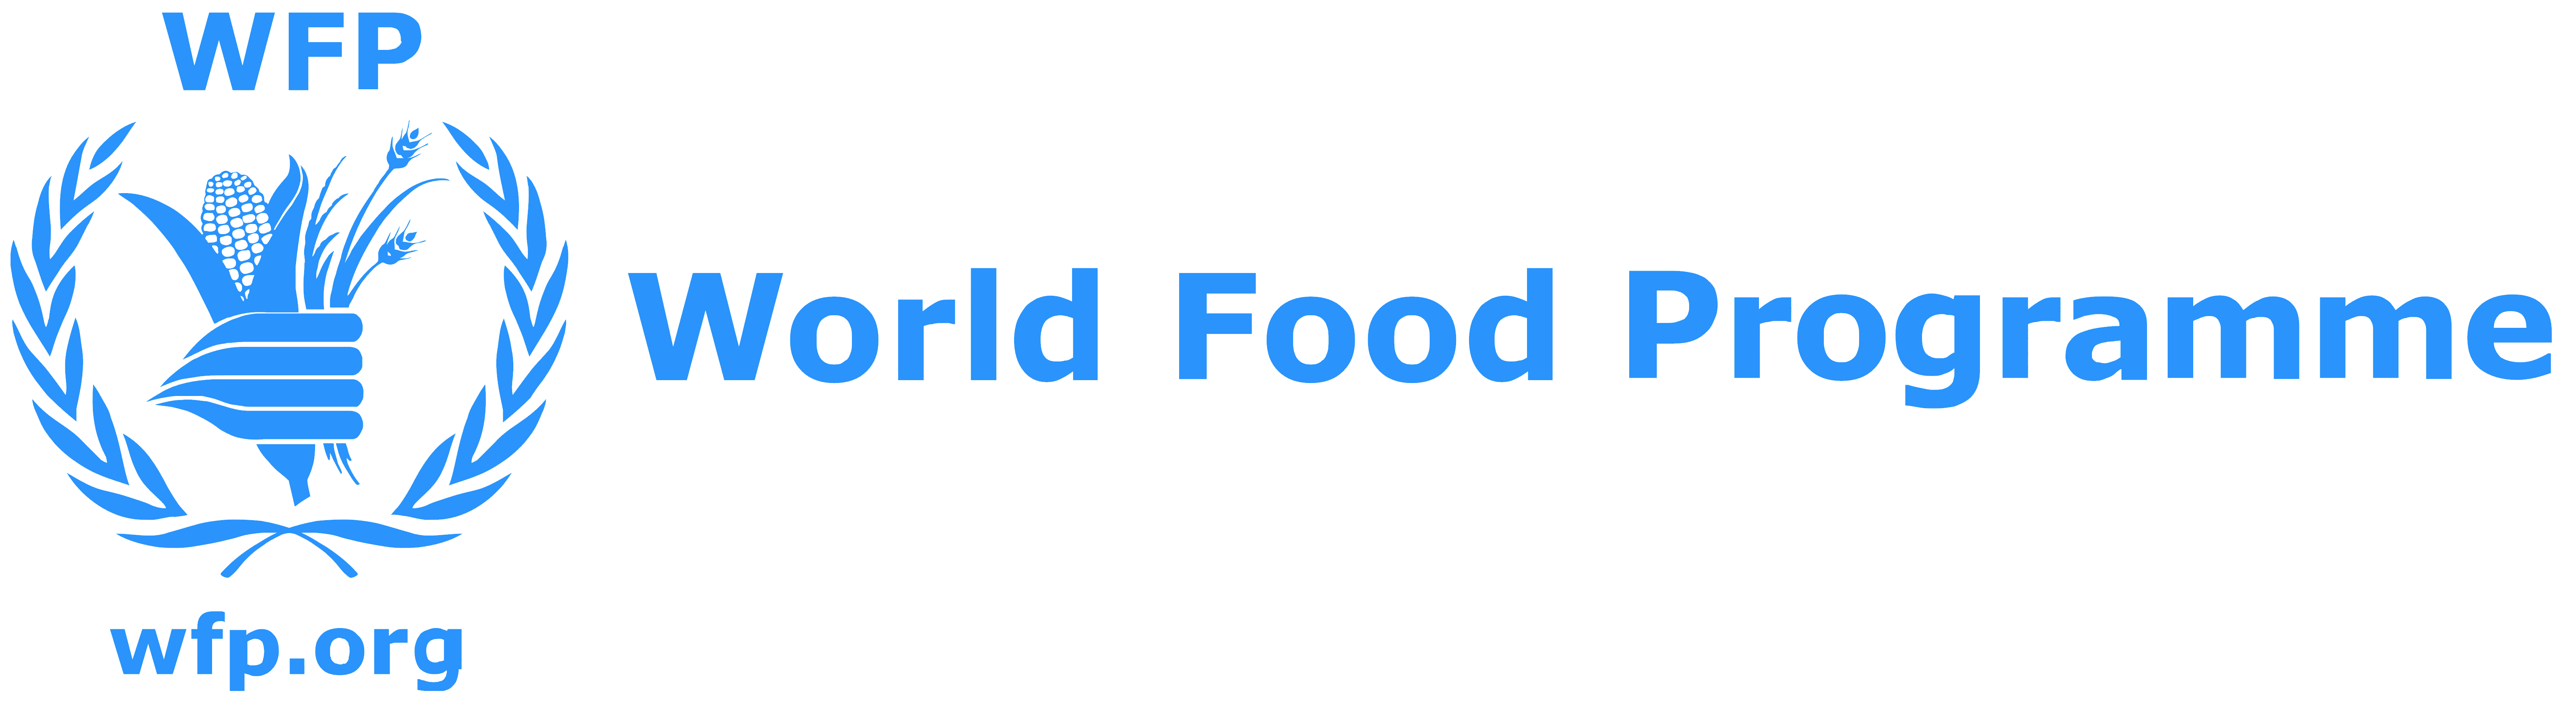 WFP Logo - WFP (World Food Programme)